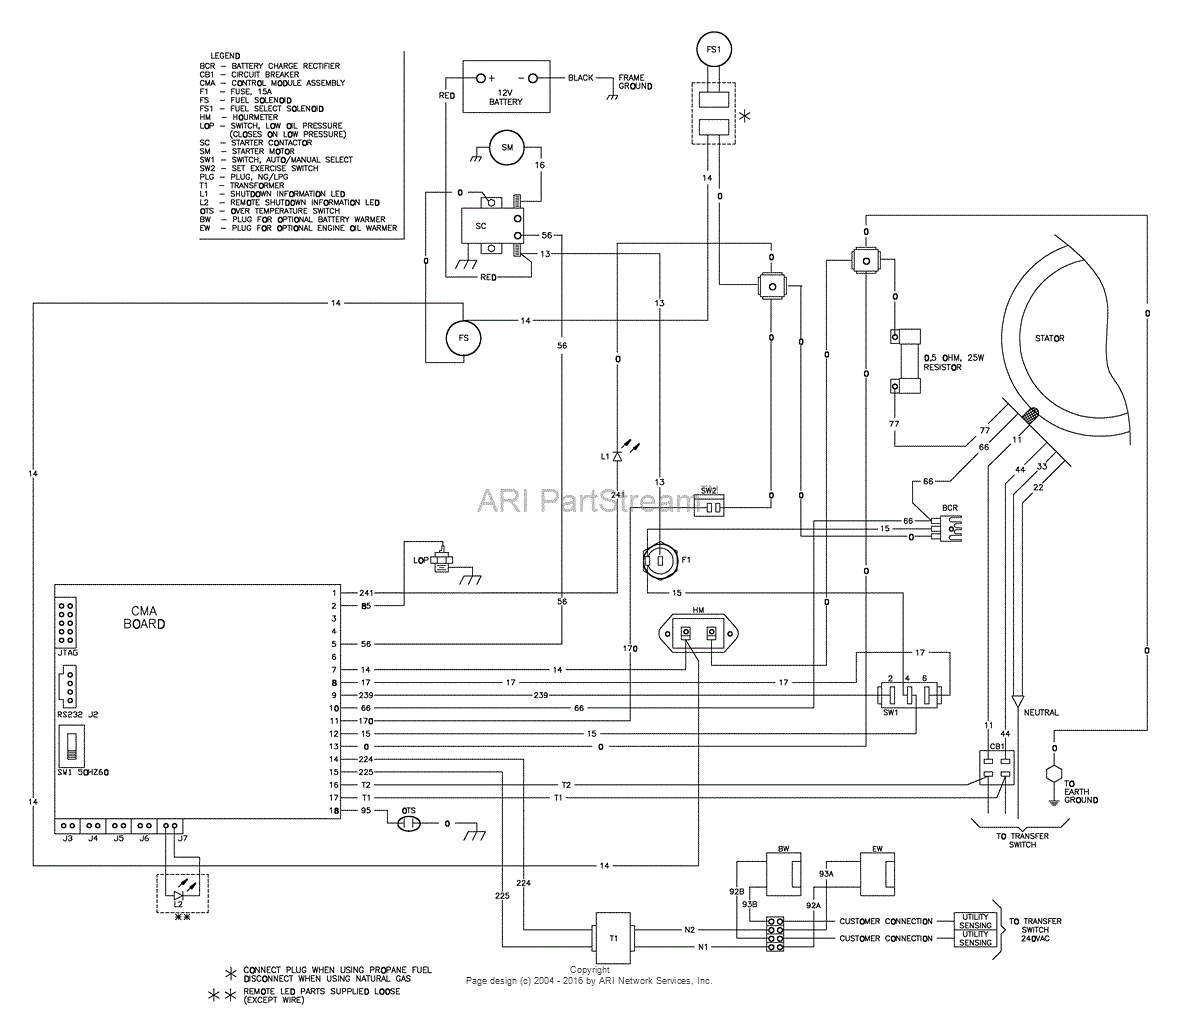 Wiring Diagram For Generac Standby Generator